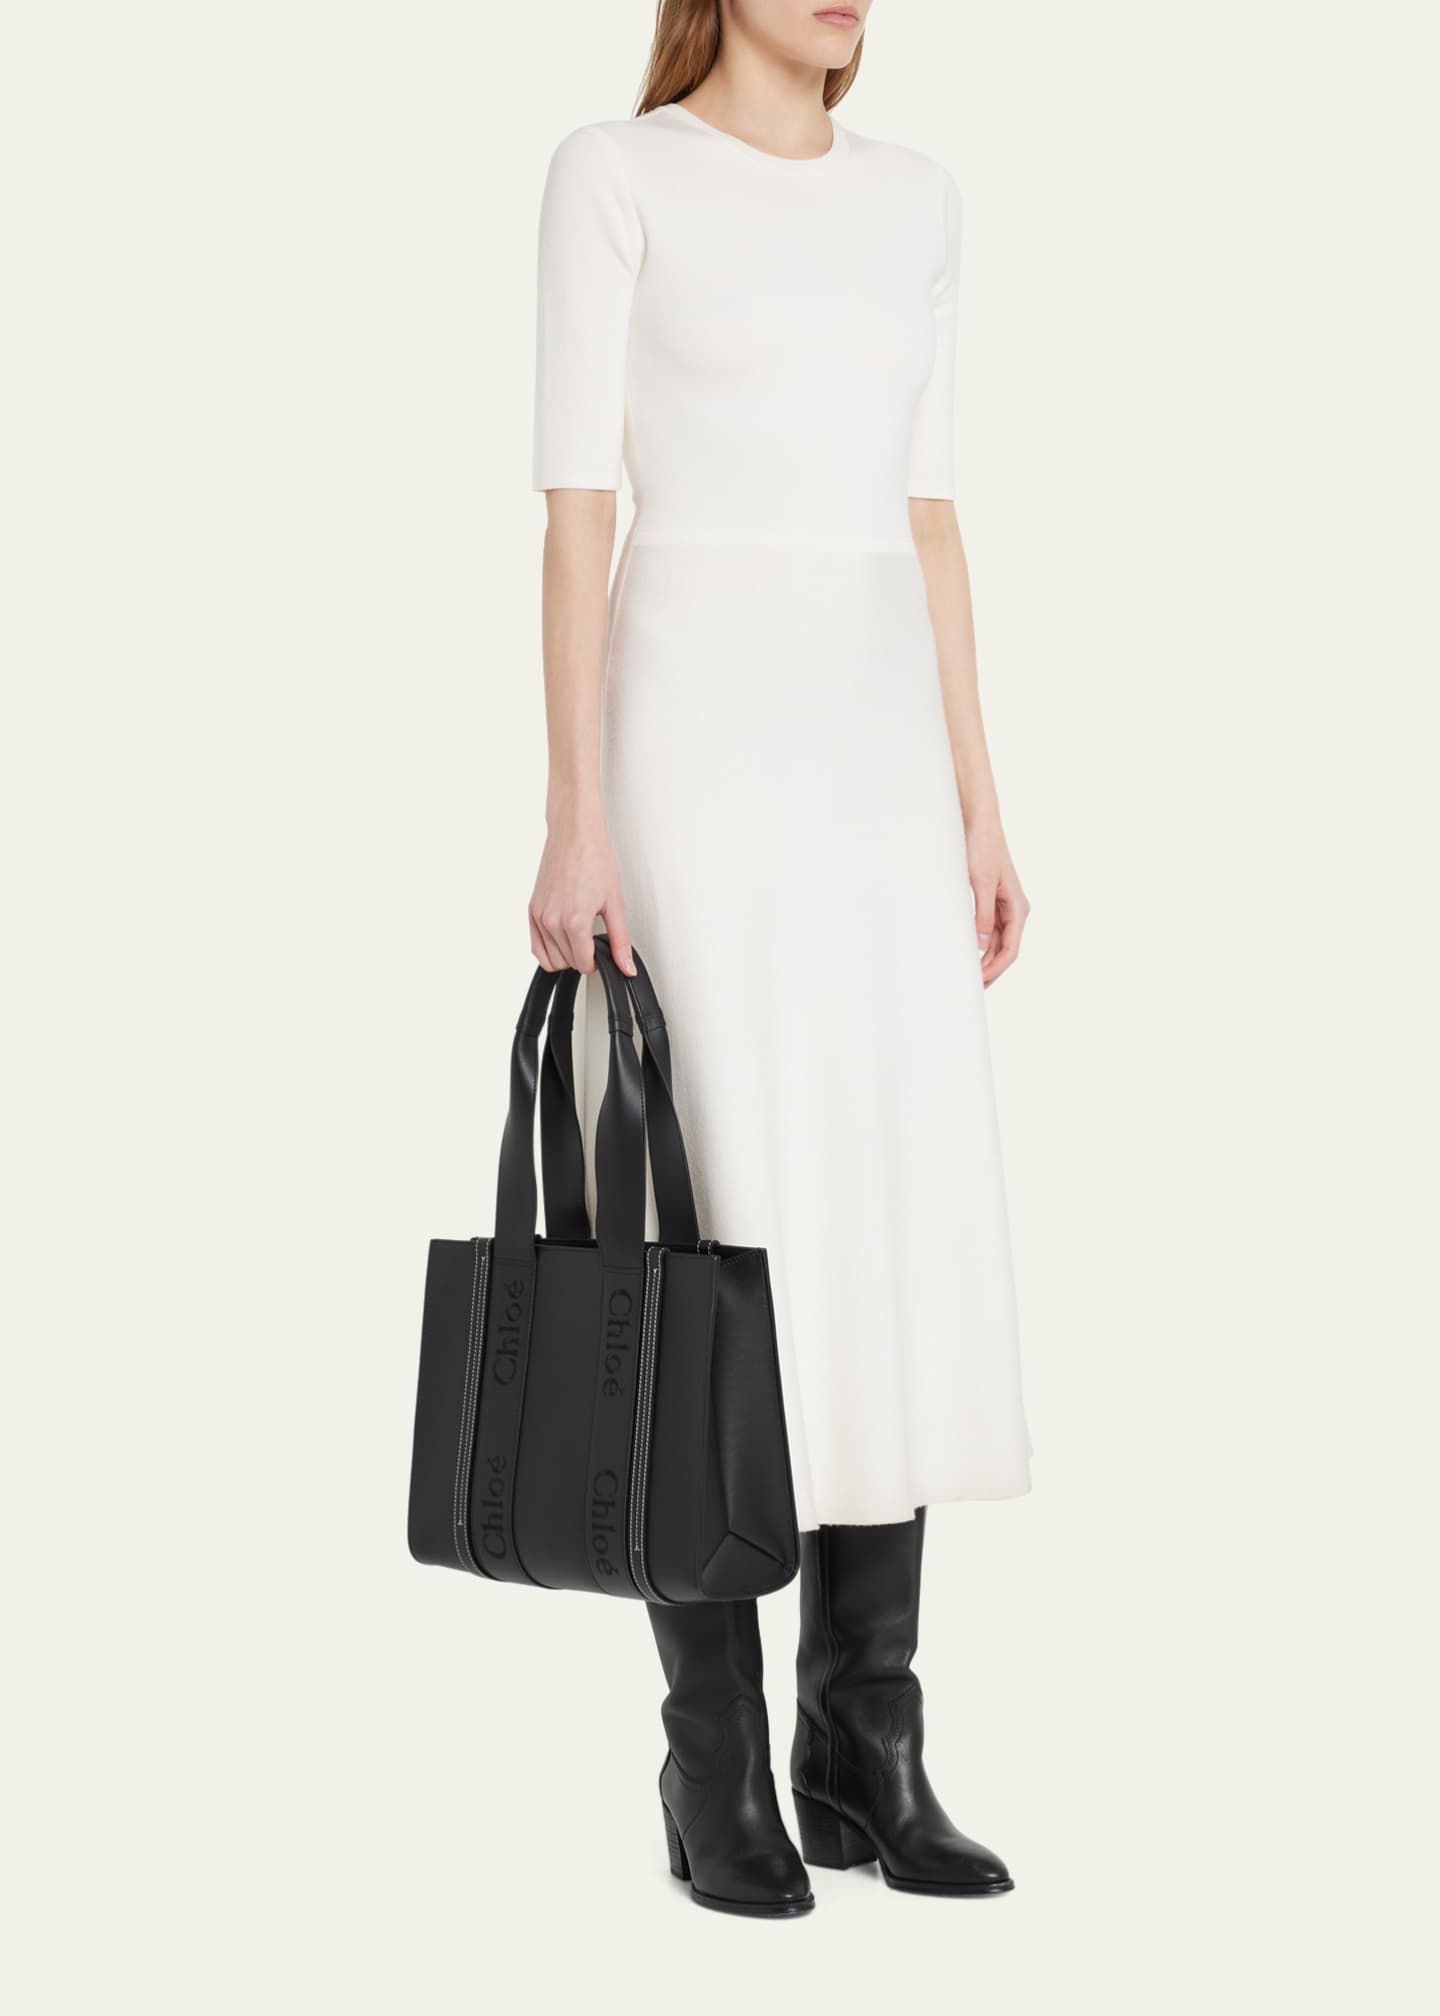 Chloe Woody Medium Tote Bag in Leather - Bergdorf Goodman